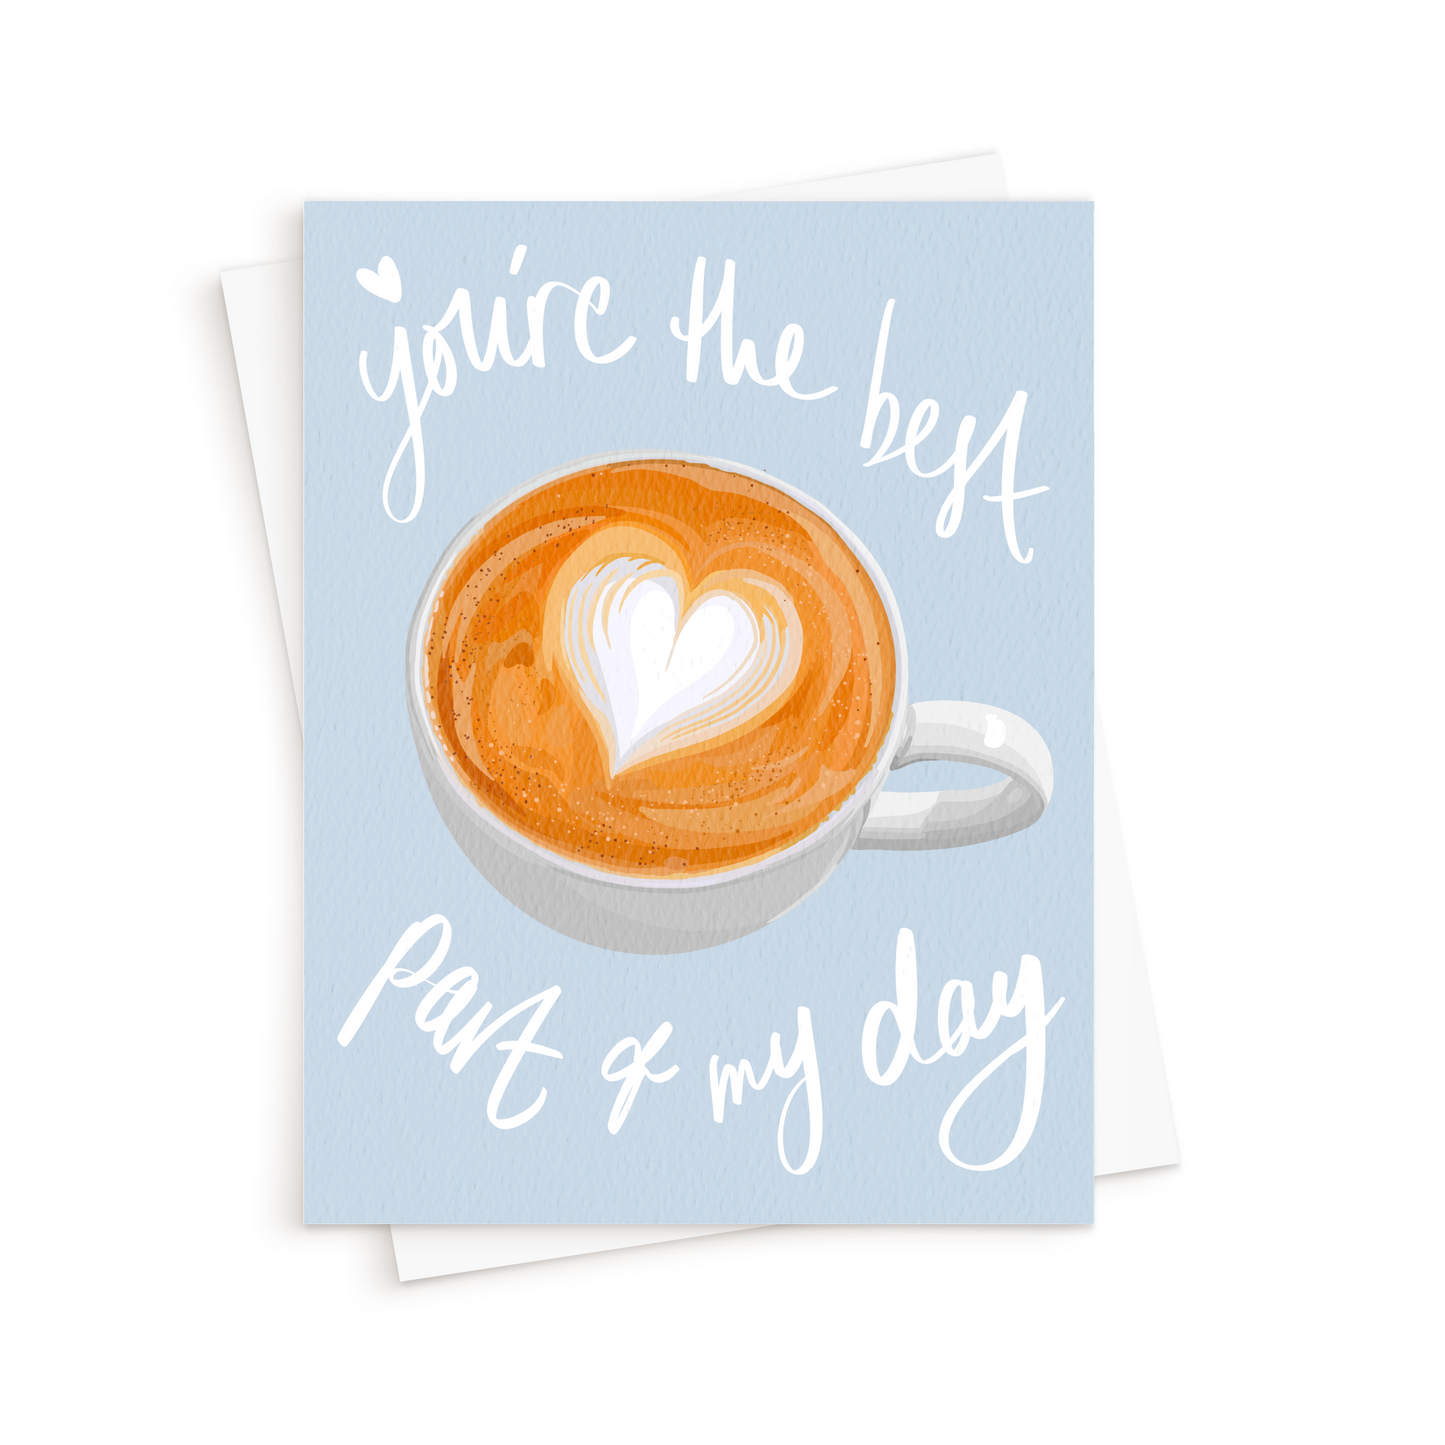 The Latte Love Card